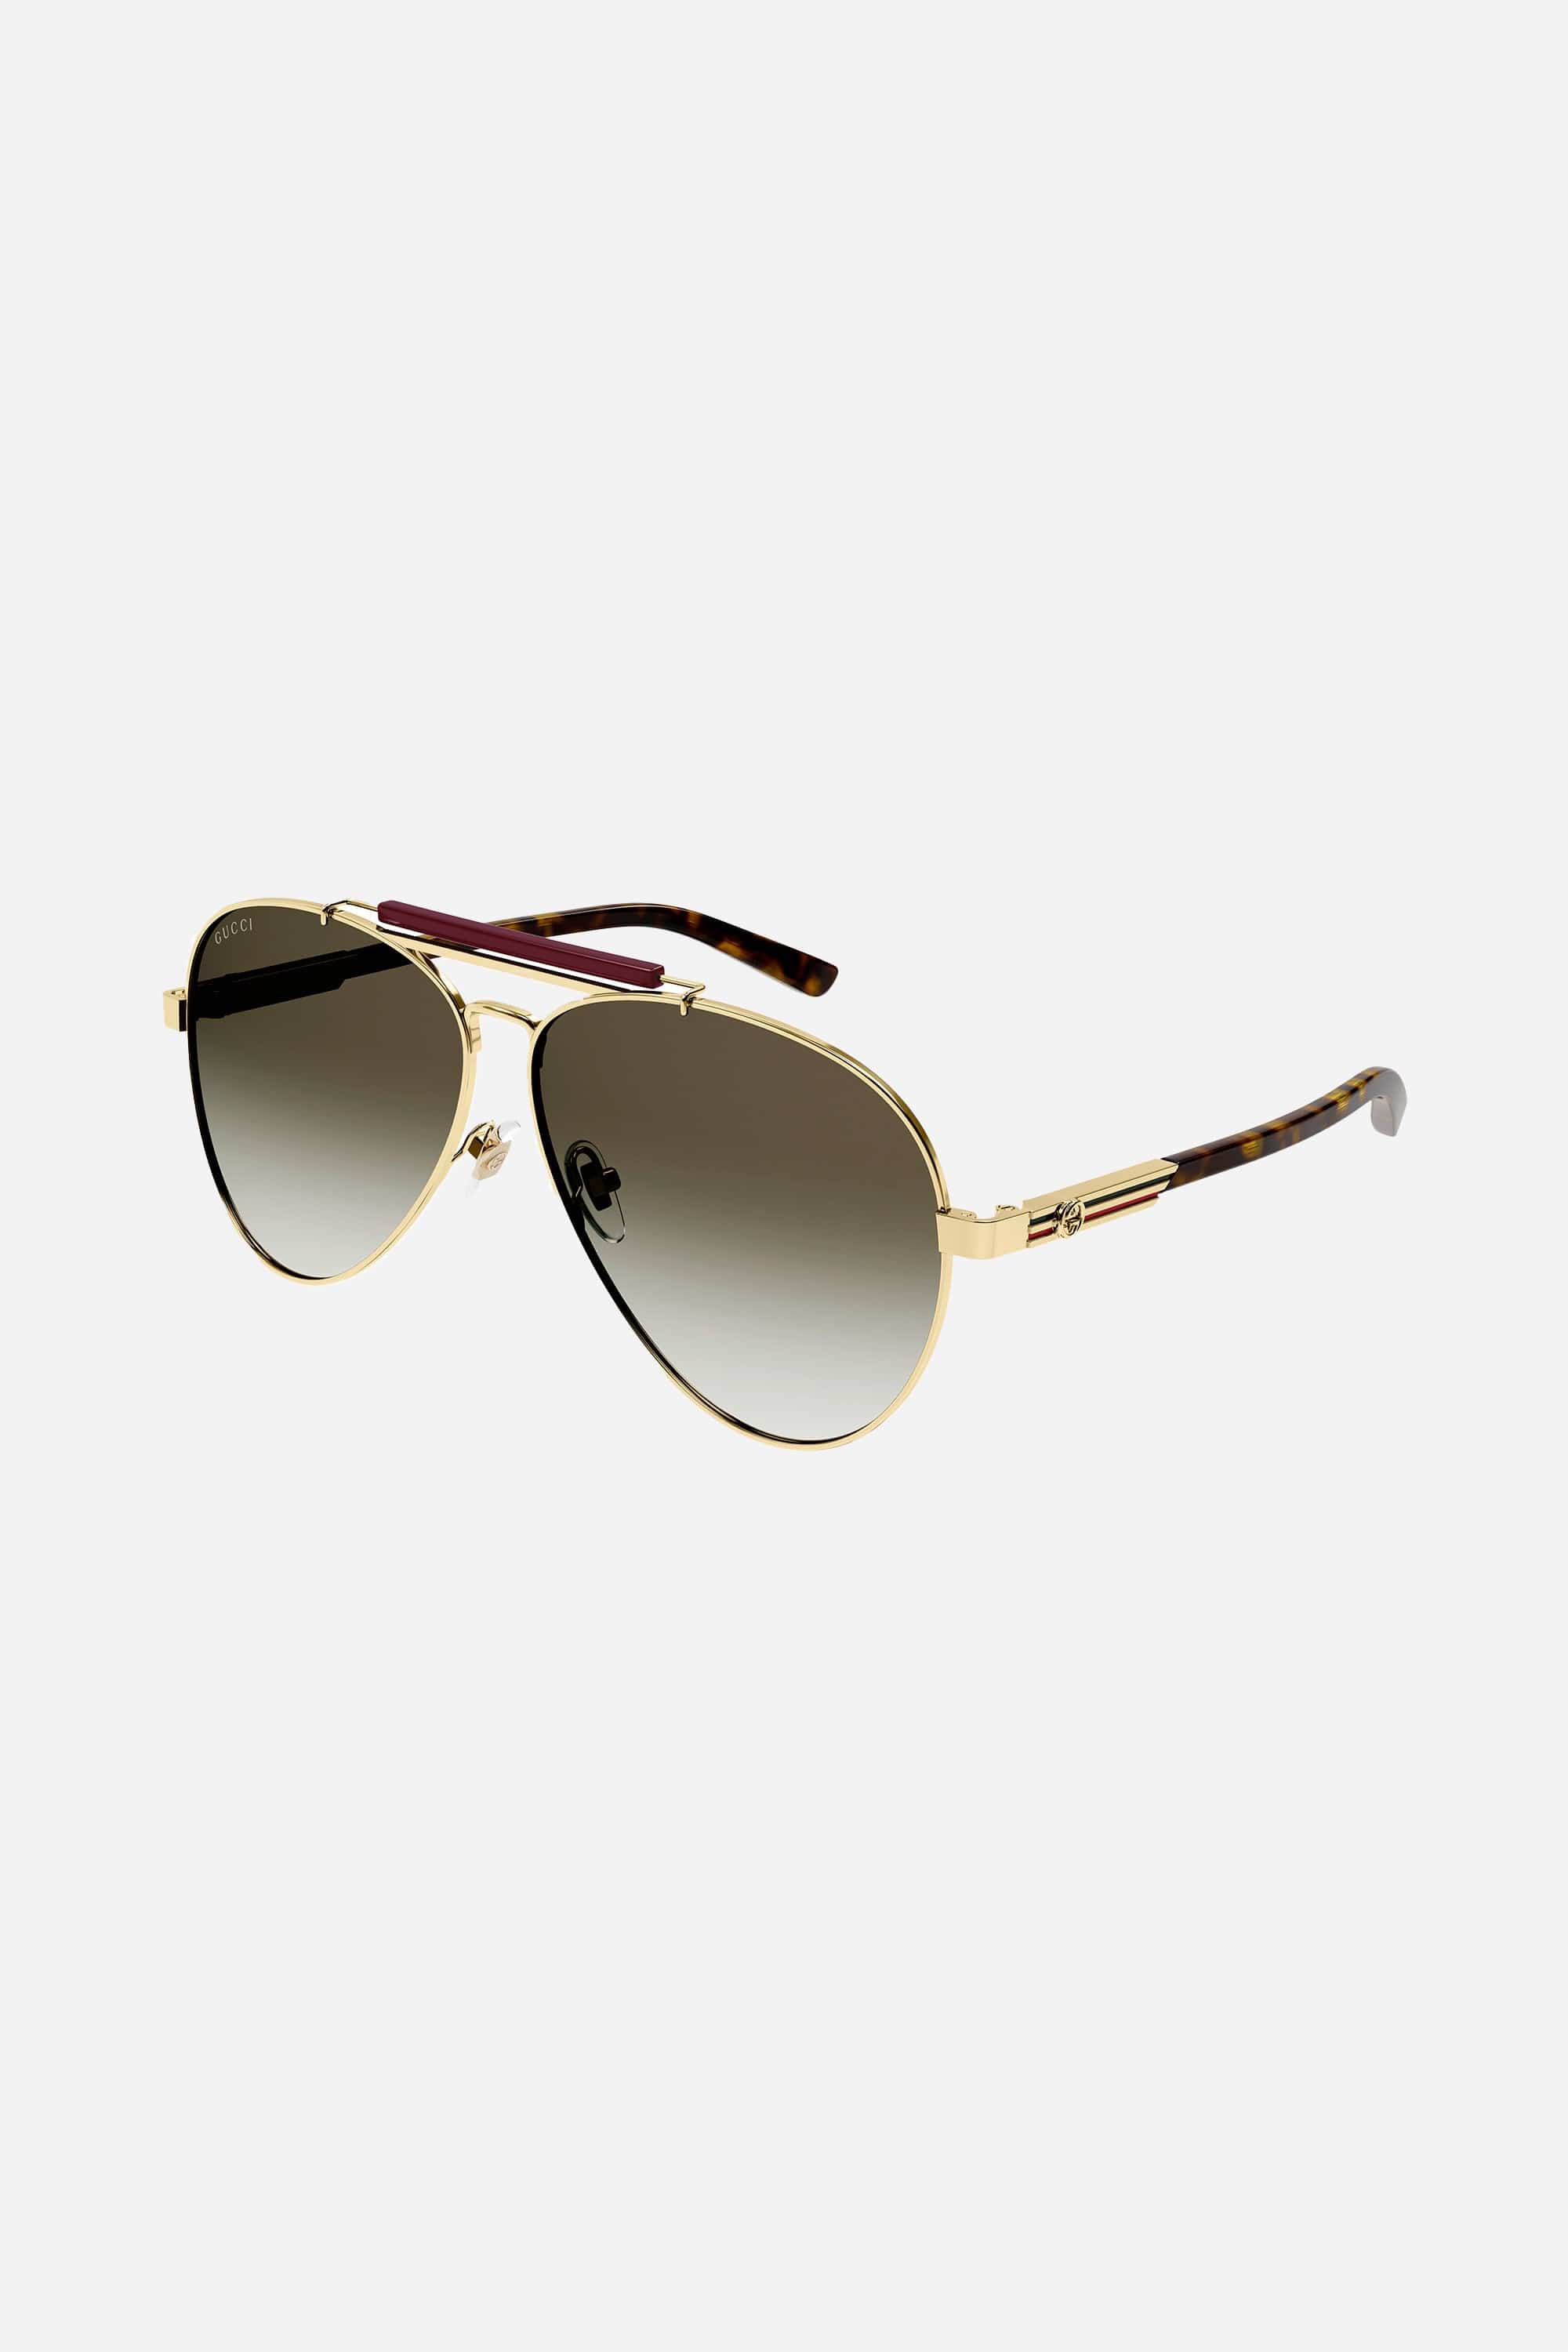 Gucci pilot brown sunglasses featuring double bridge - Eyewear Club